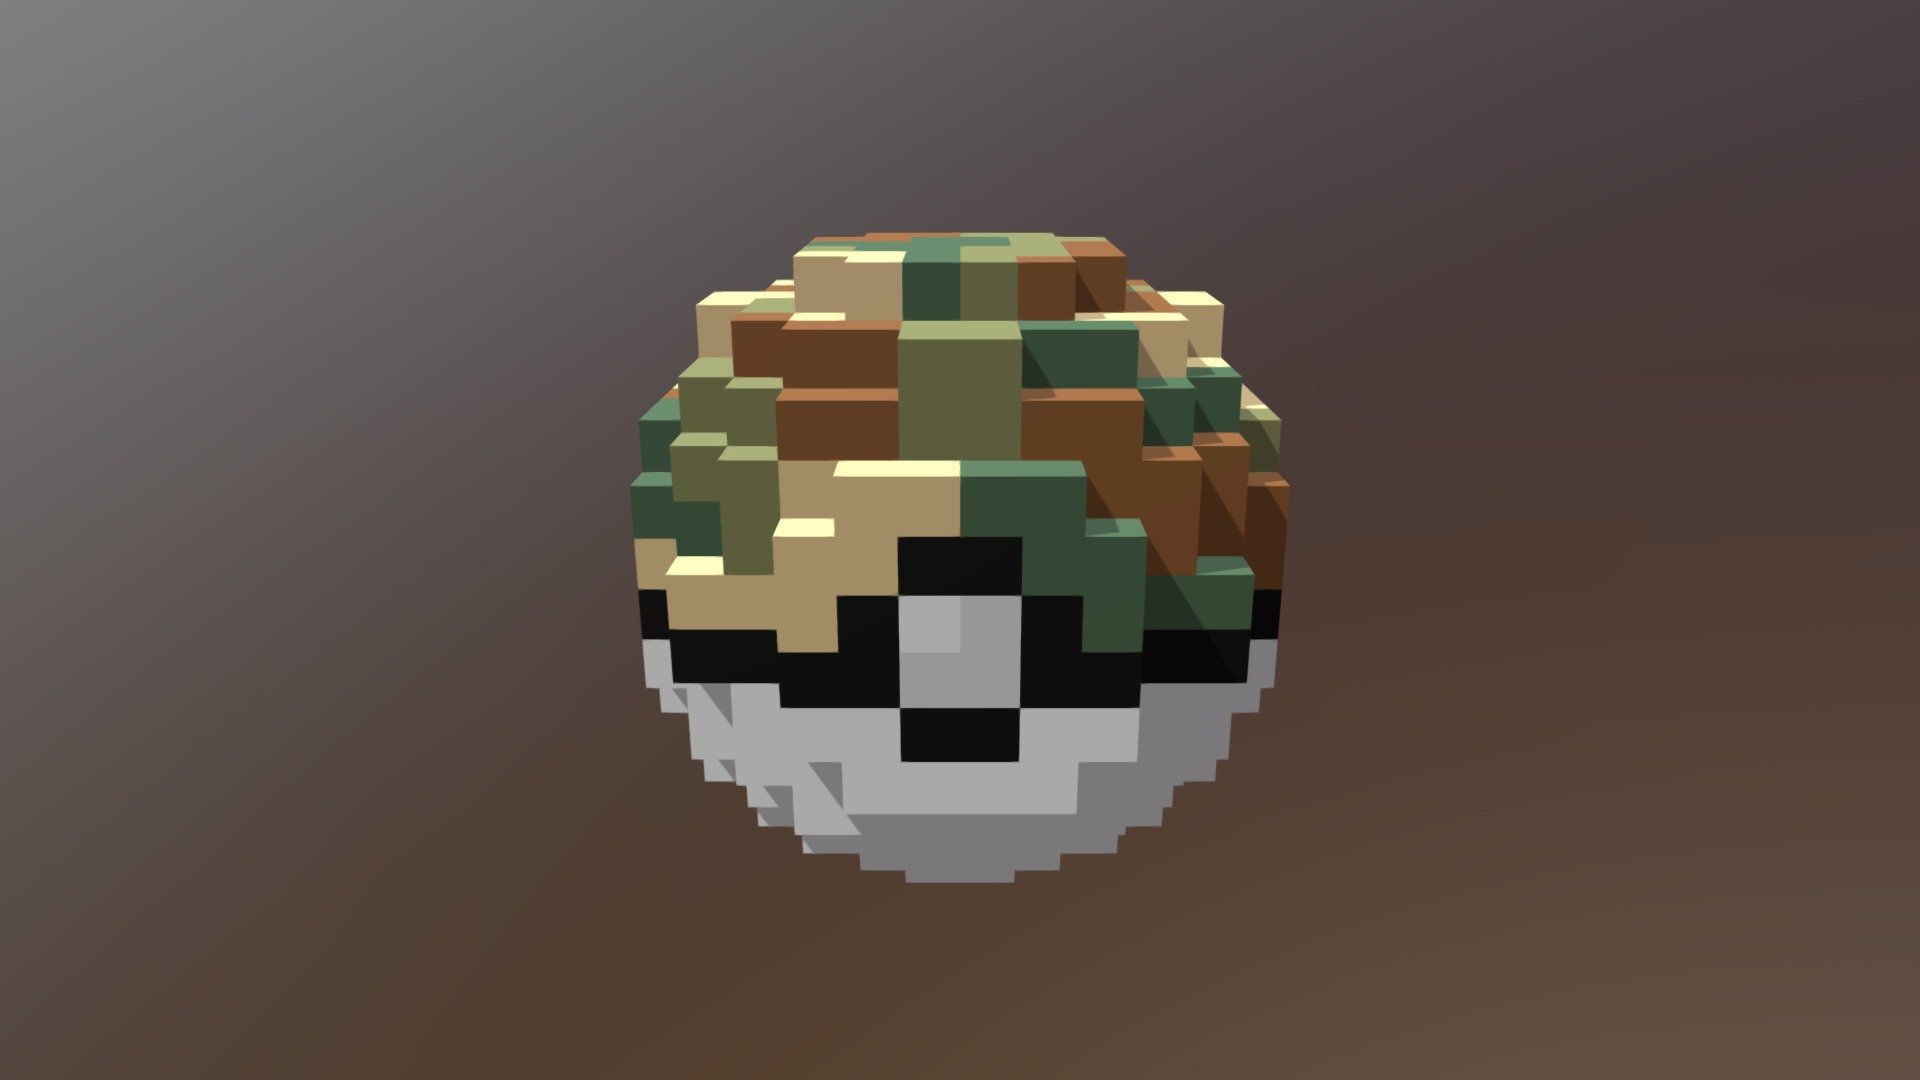 safari ball pixel art